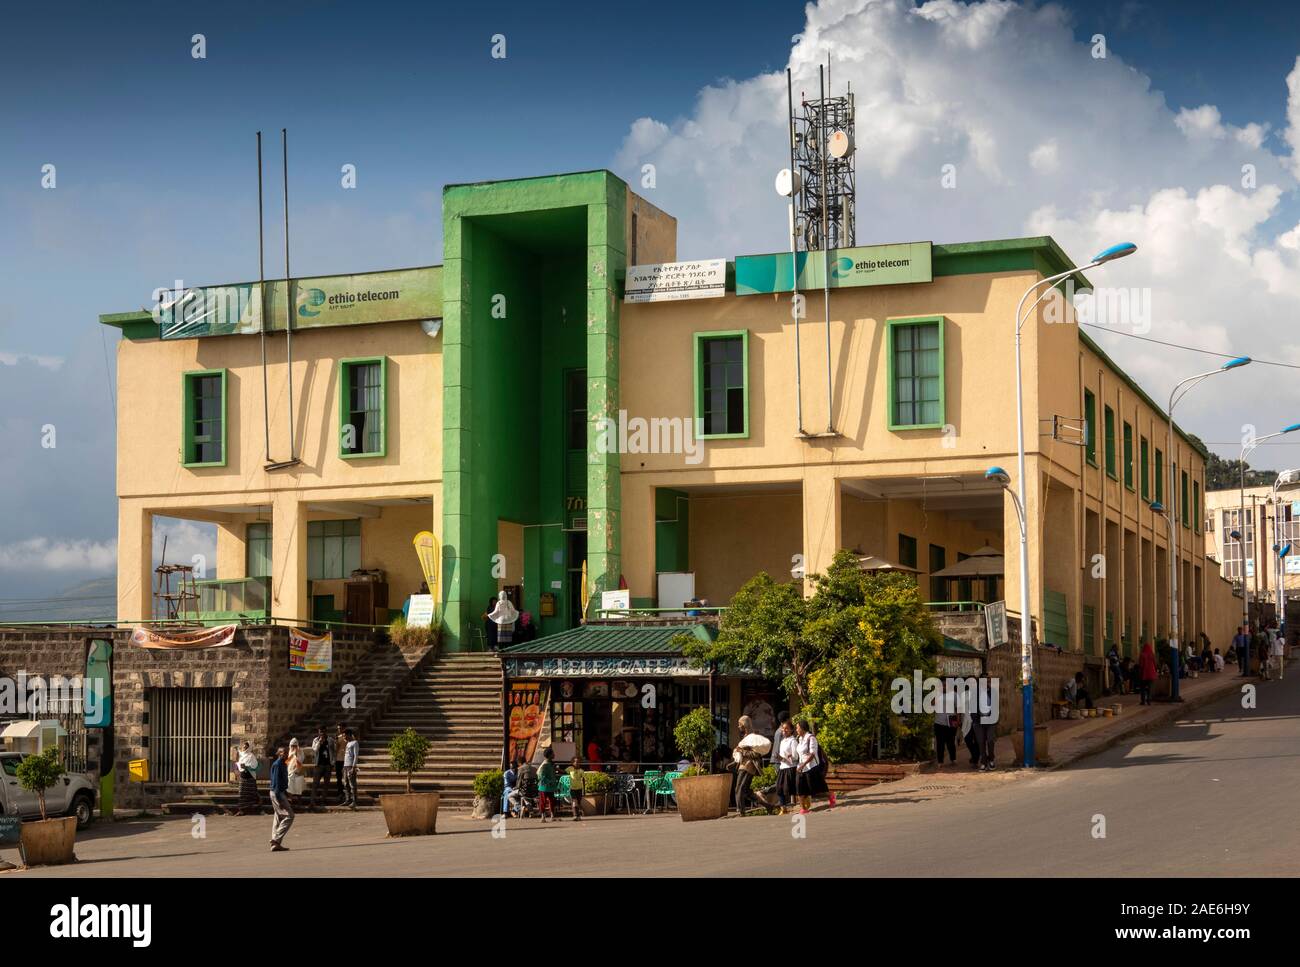 Ethiopia, Amhara Region, Gondar, town centre, Piazza, Tele Café outside Ethio Telecom Office Stock Photo